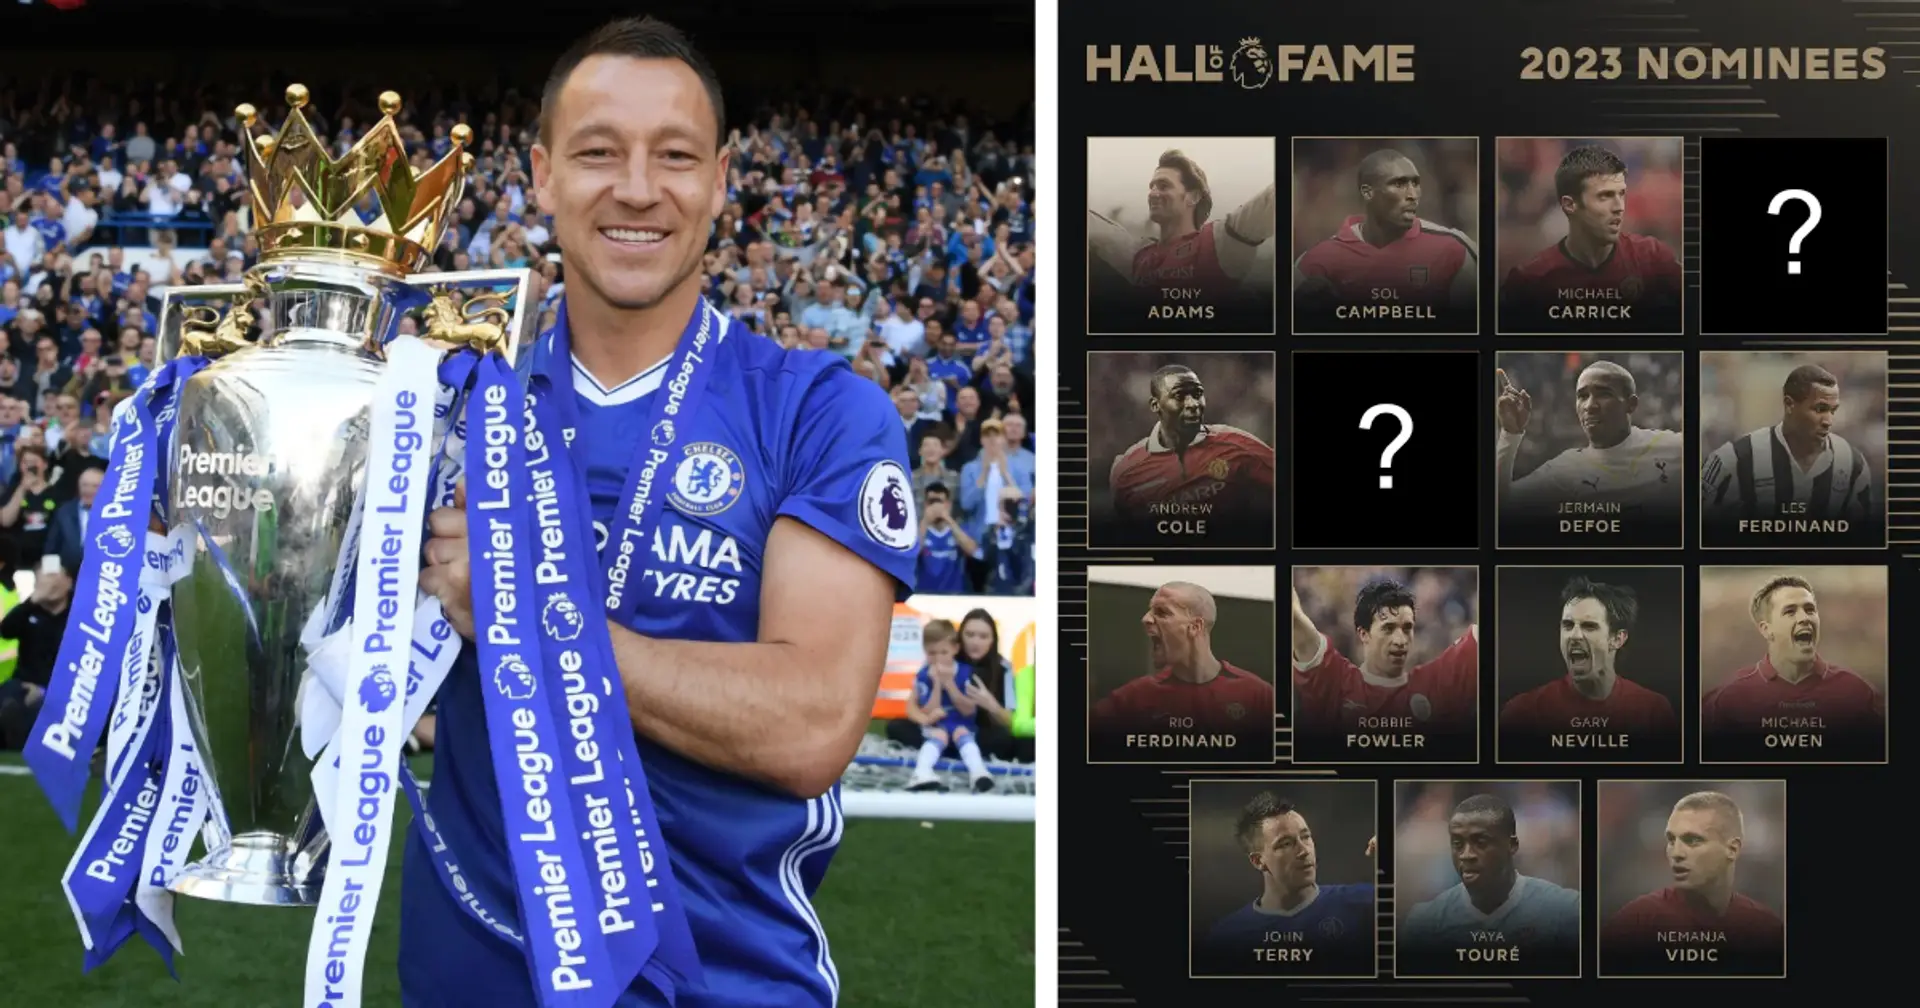 8 Legends Join Premier League Hall of Fame